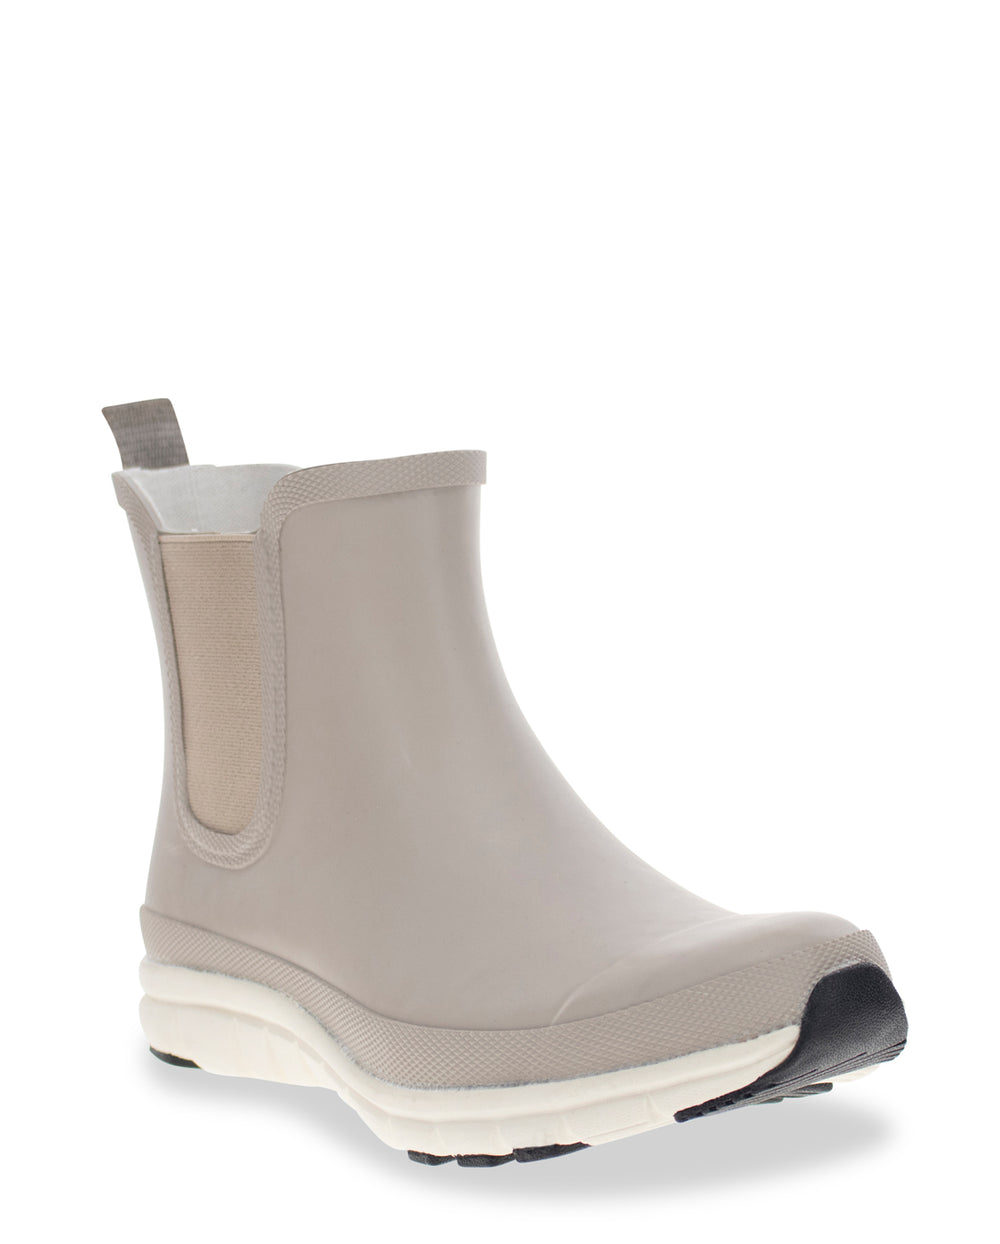 Women's Rain Runner Sneaker Boot- Taupe-_alt_womens-field-clog - chelsea - MAP - new - pfs:label-NEW - rainboot-Taupe